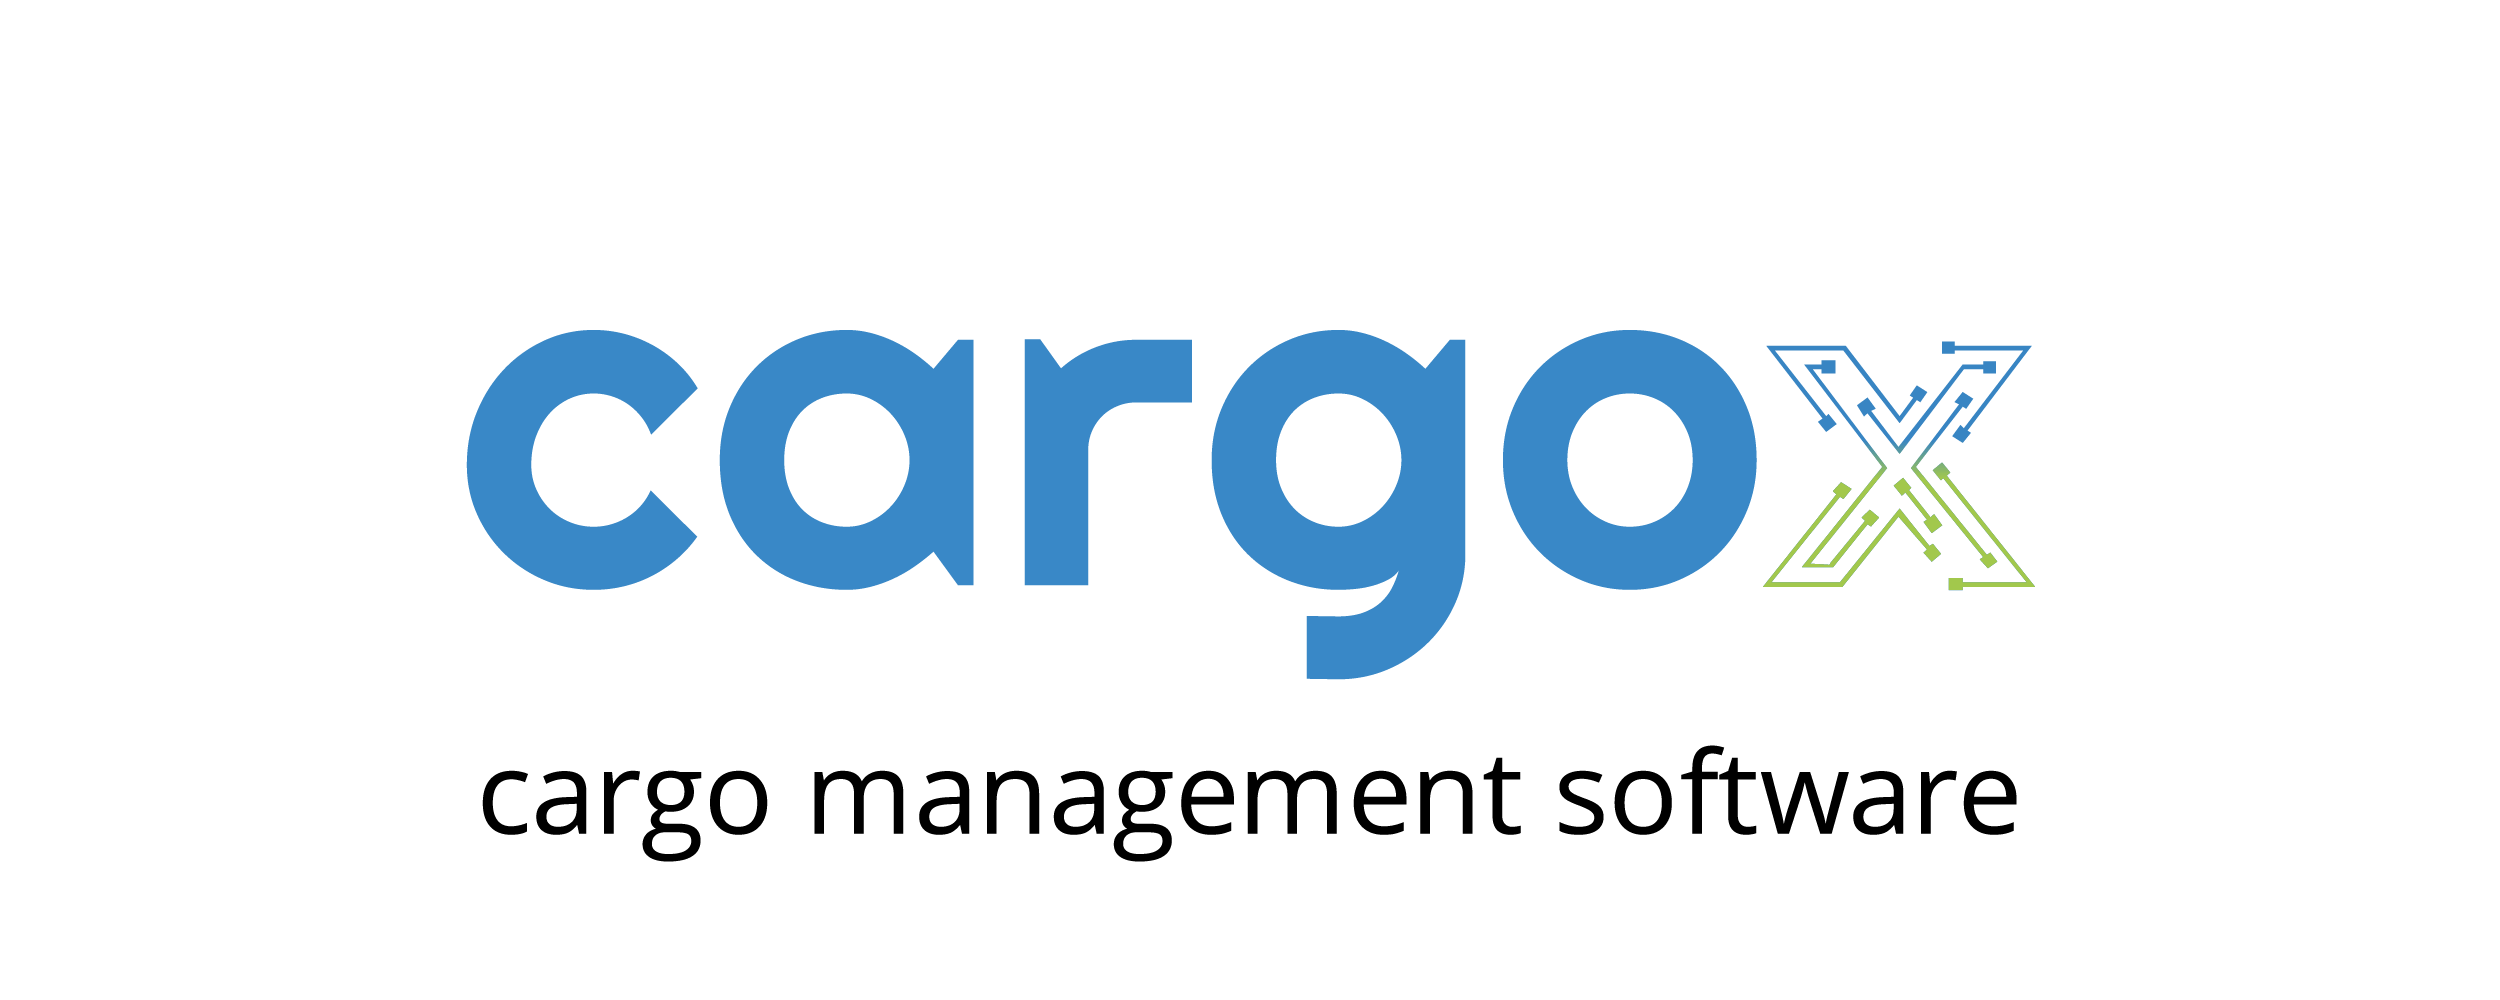 Cargo Management Software